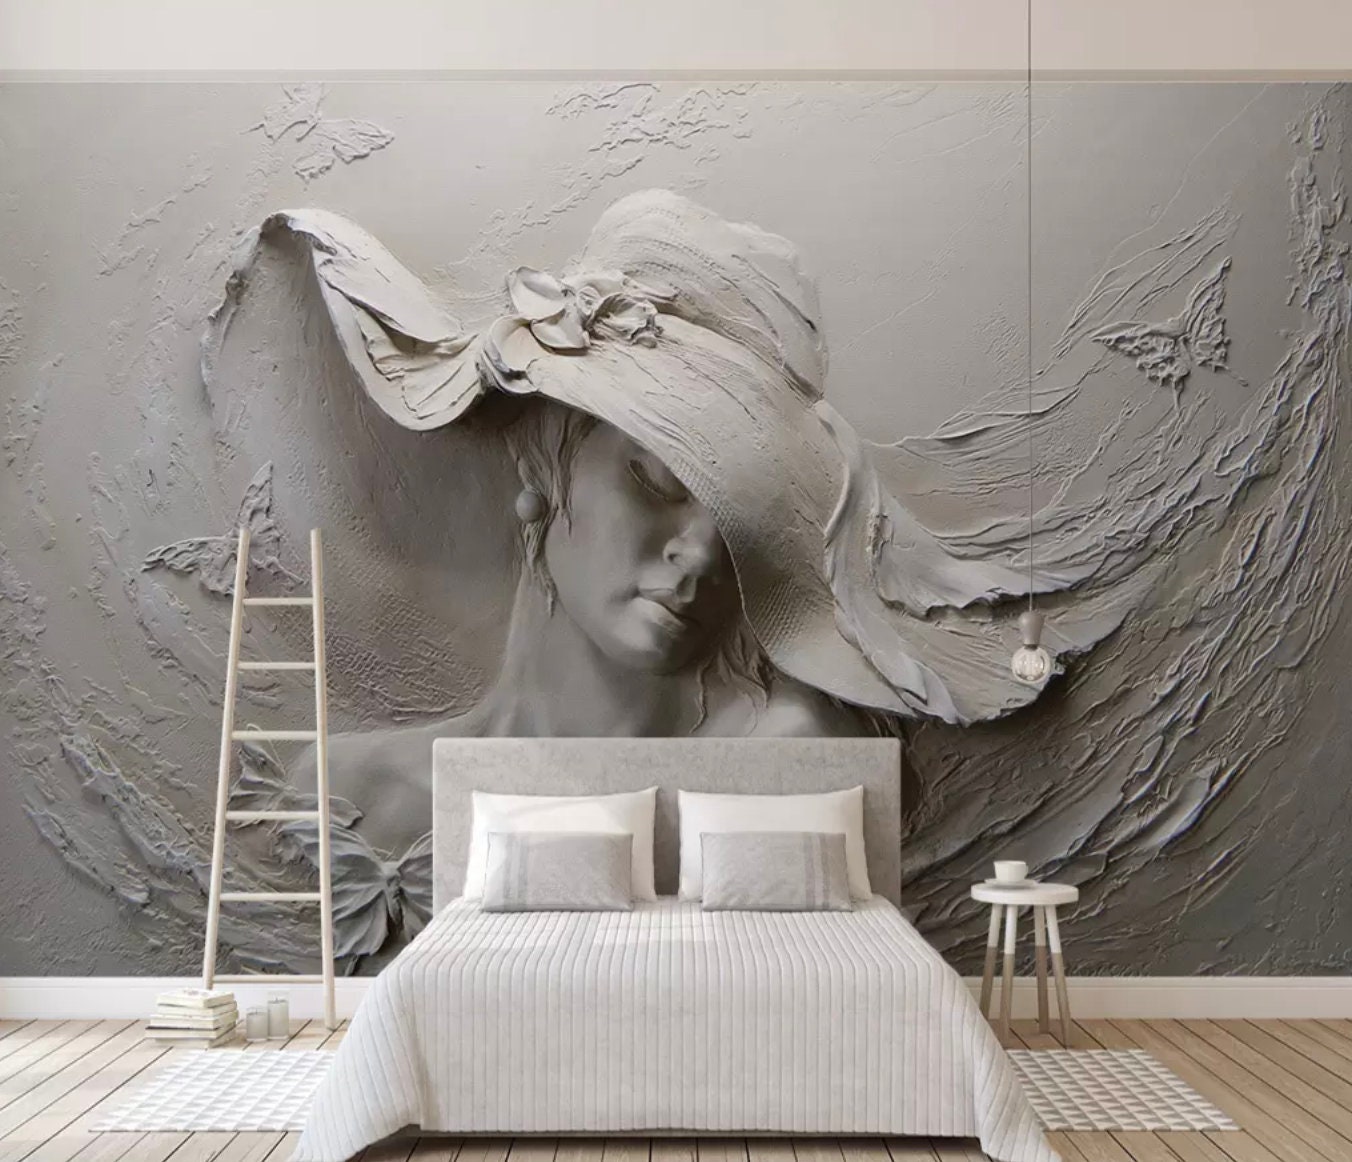 Sculpture Wallpaper 3D Embossed Wall Mural Pretty Woman Cement Wall Art Living Room Bedroom Cafe Design